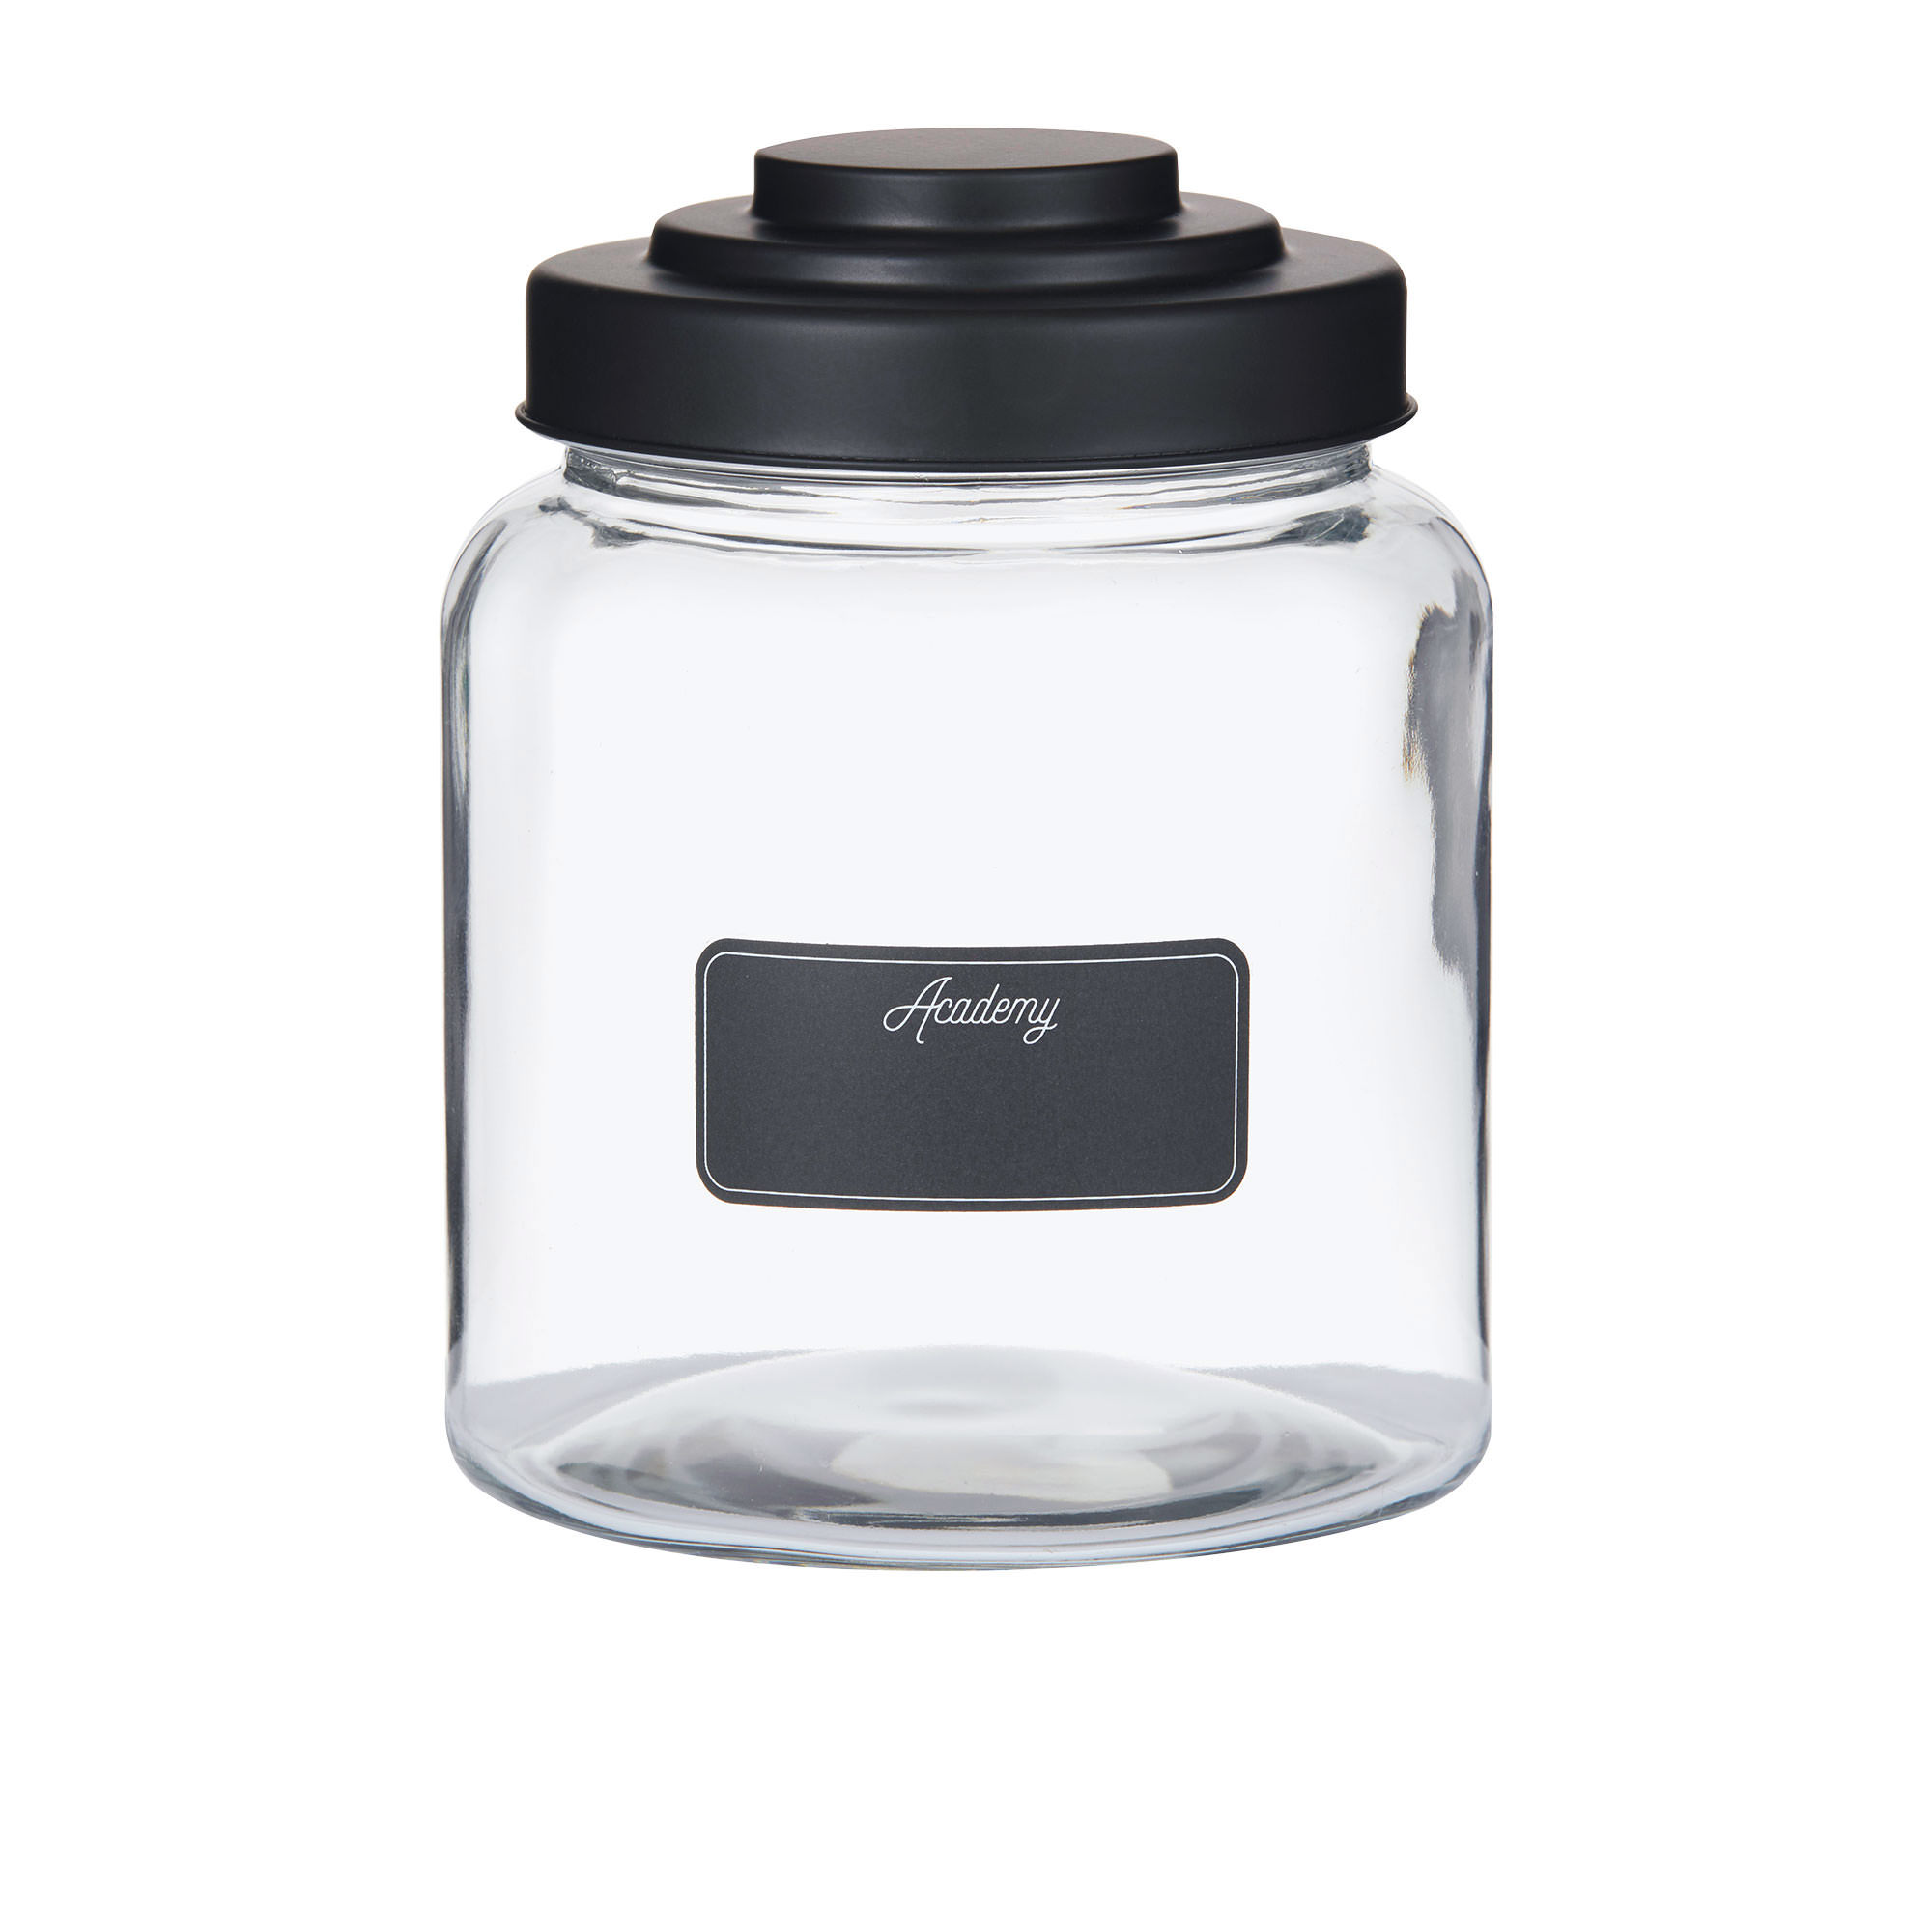 Academy Glass Display Jar with Blackboard Label 2.6L Image 1